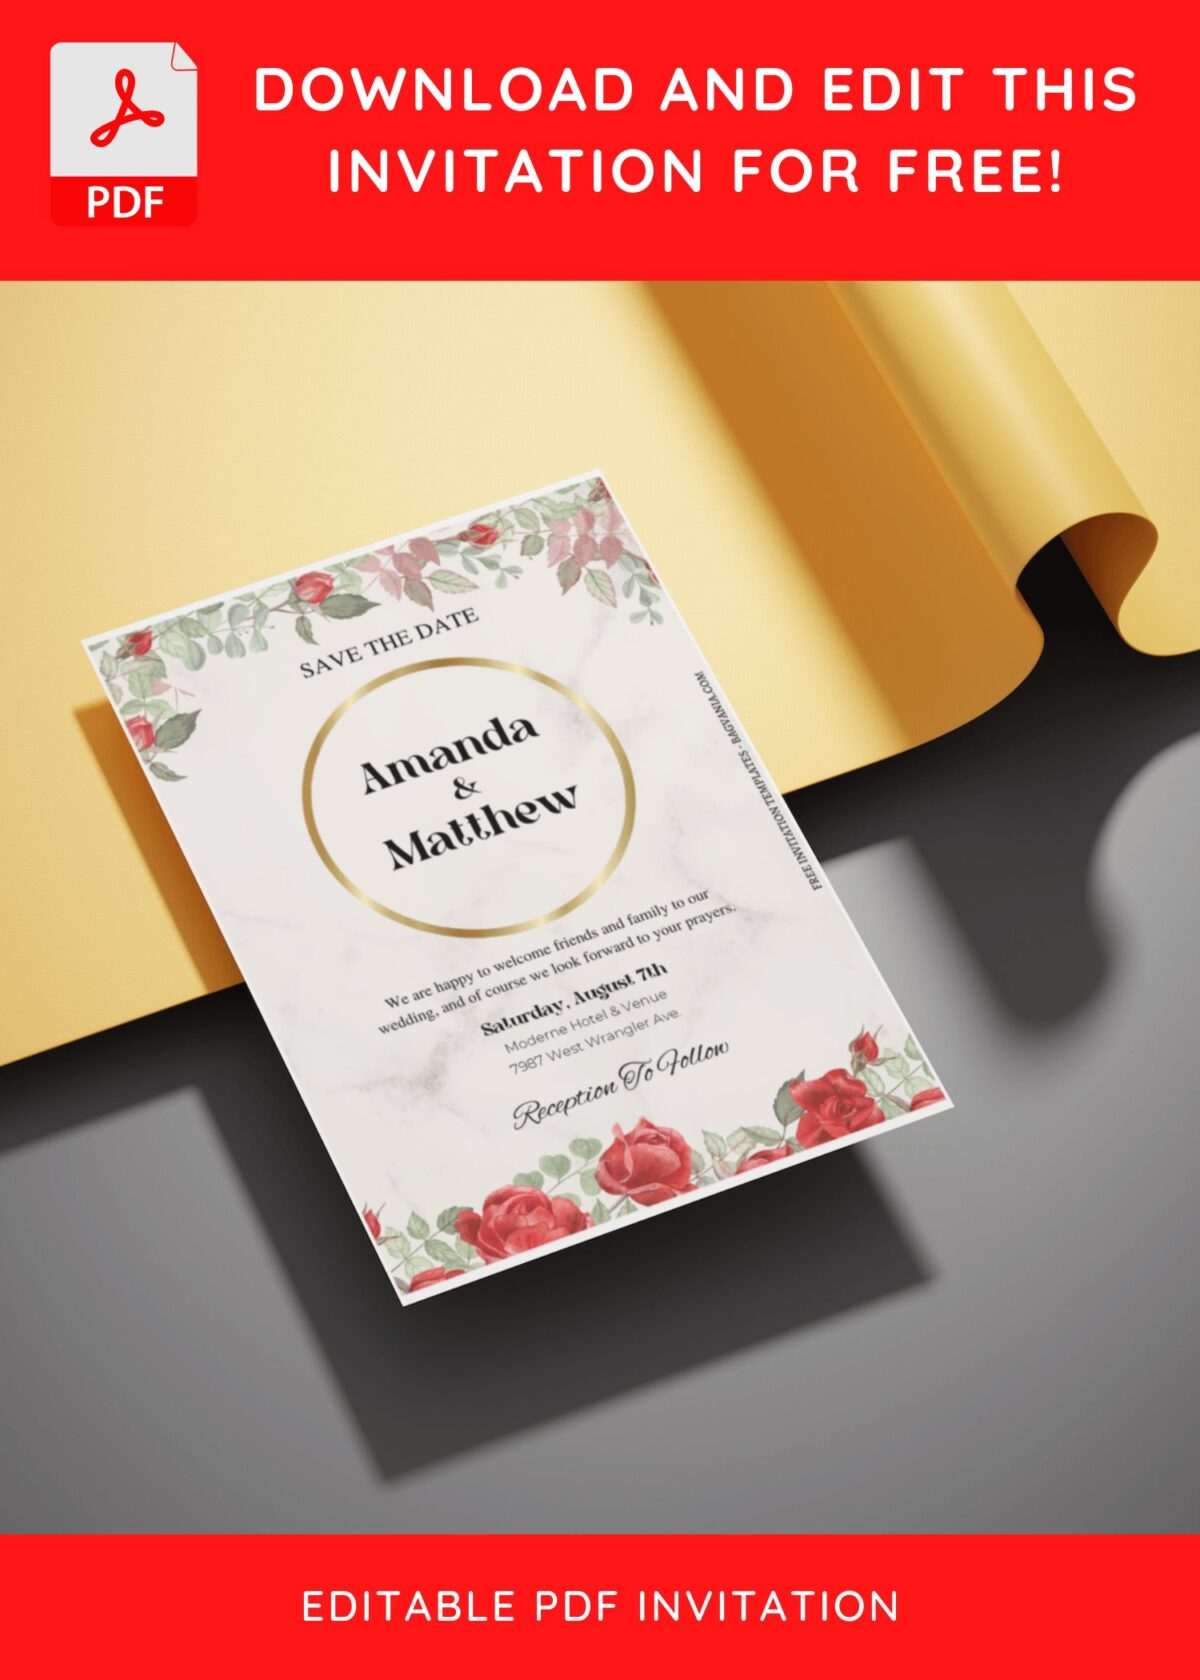 (Free Editable PDF) Whimsical Rosebud Wedding Invitation Templates with floral border